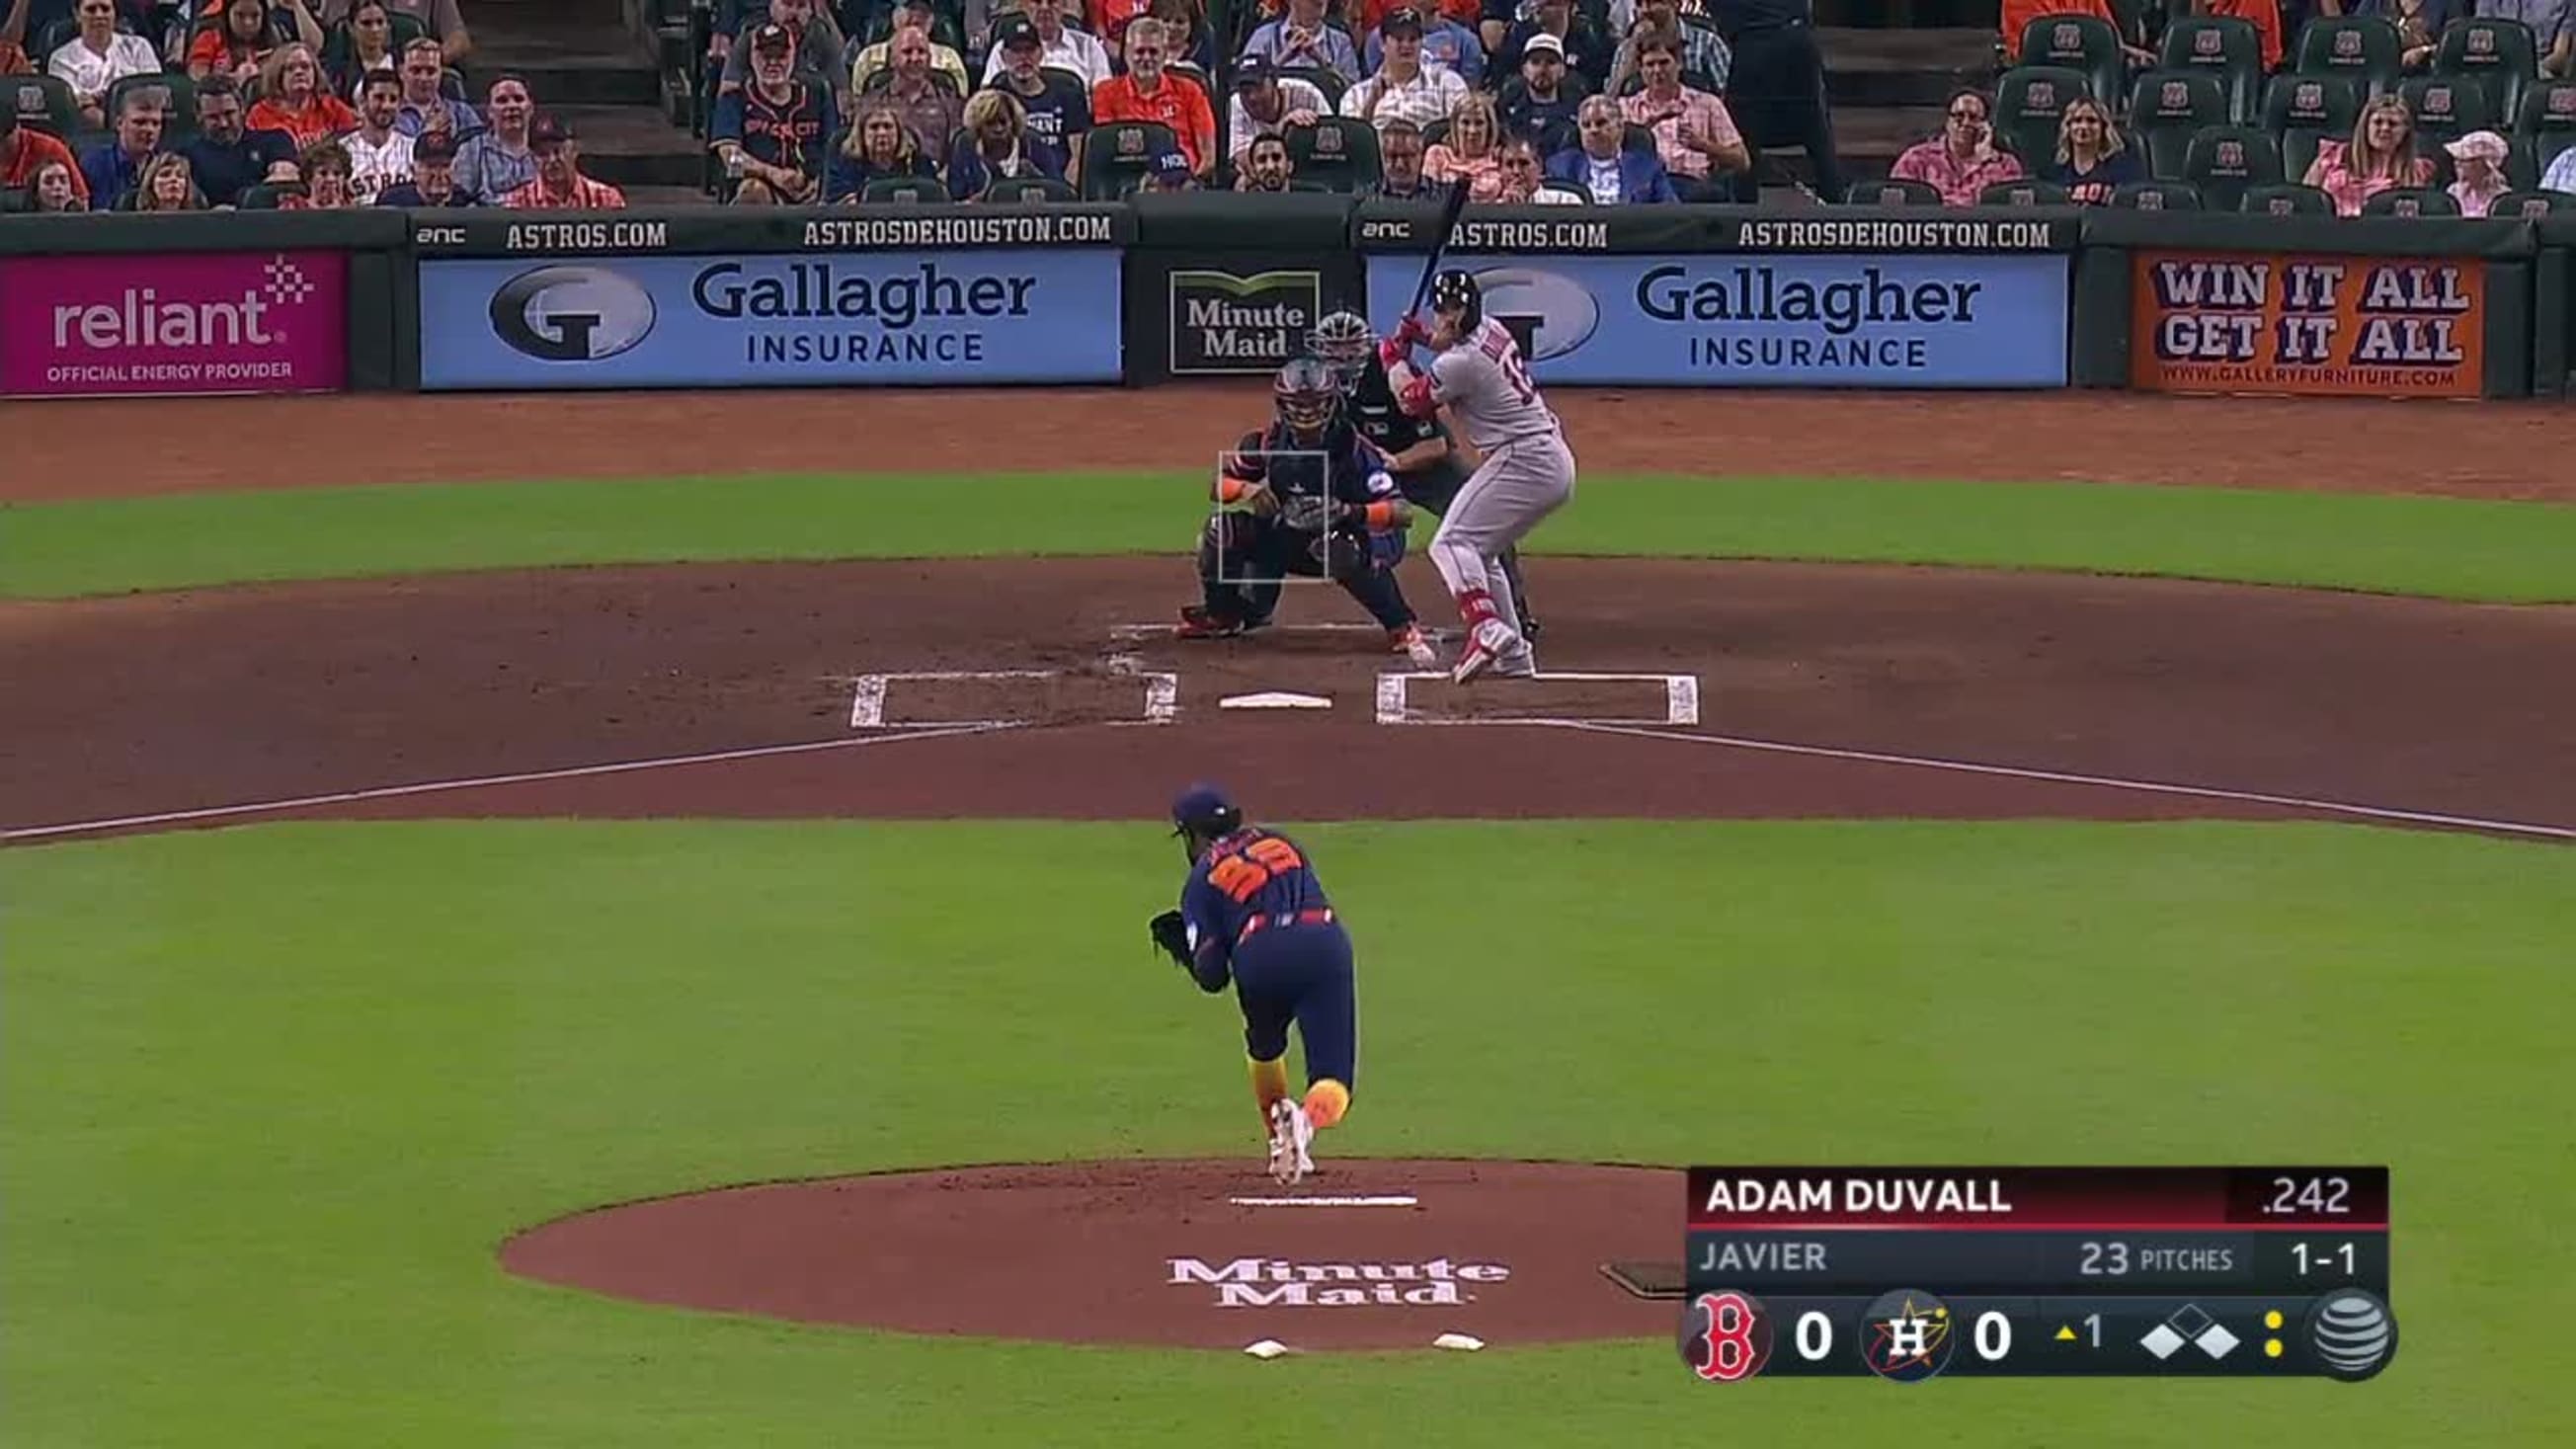 Red Sox broadcaster Kevin Millar calls Adam Duvall's home run